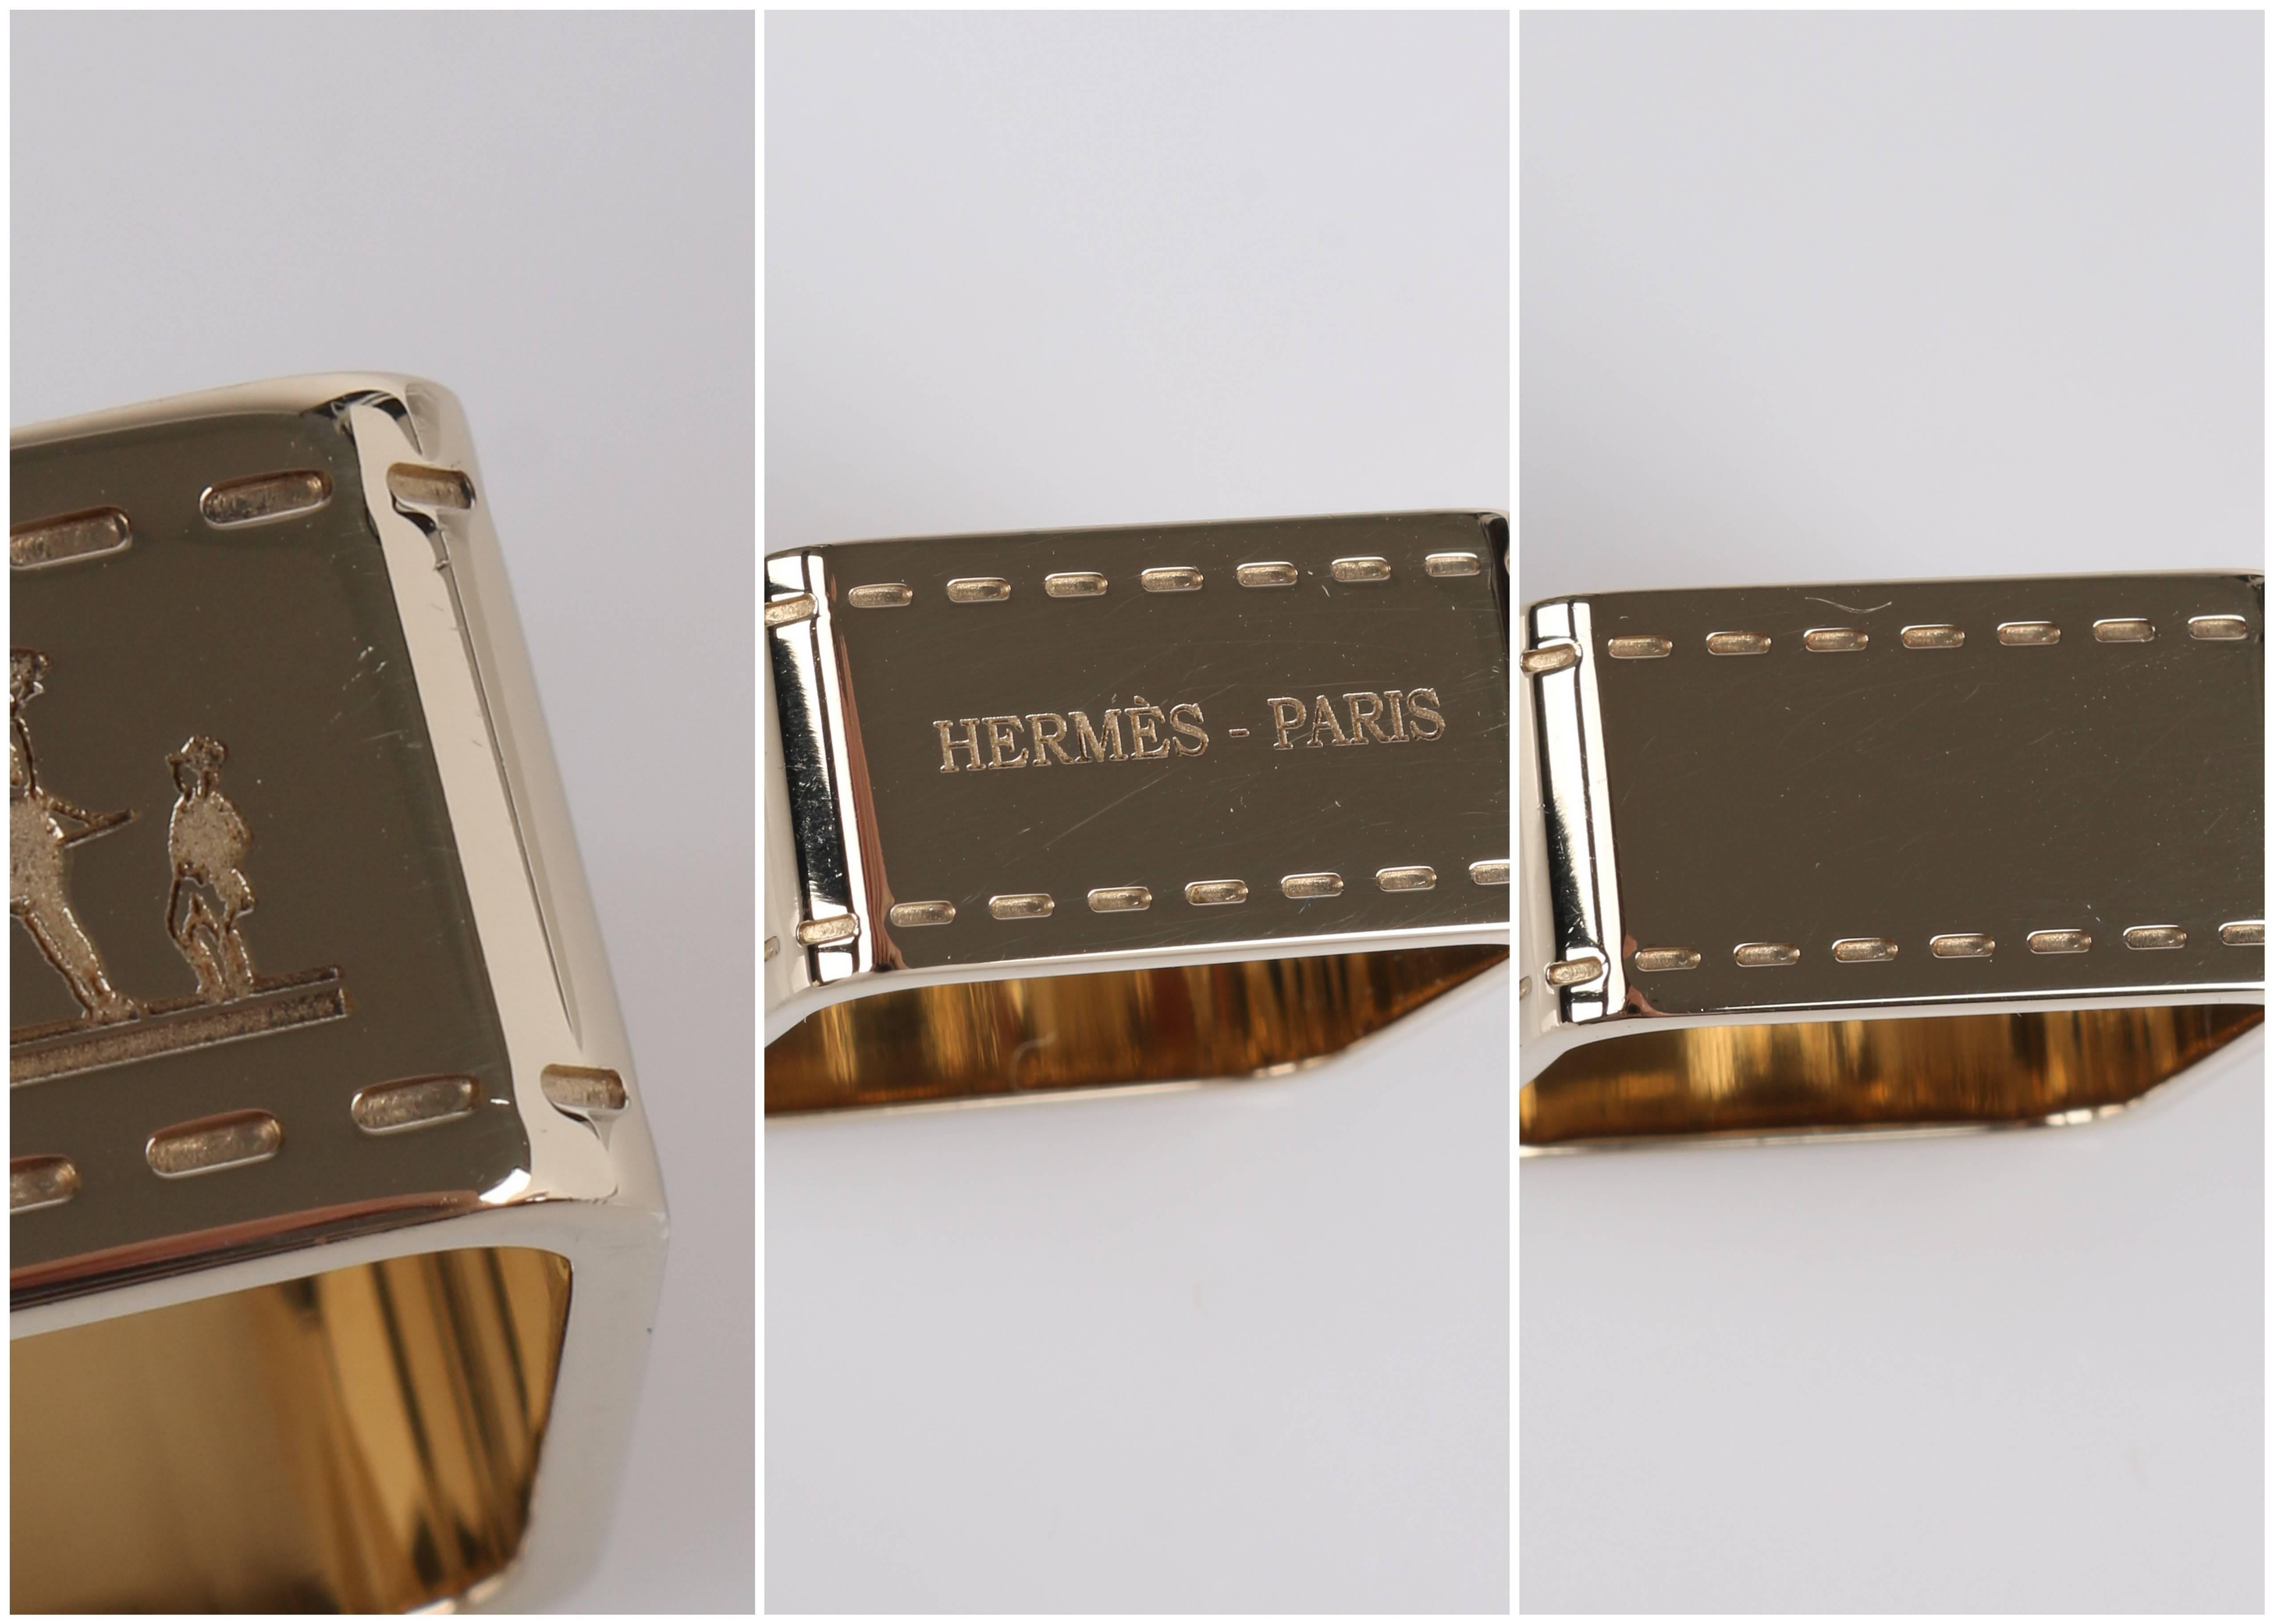 Hermes Paris 